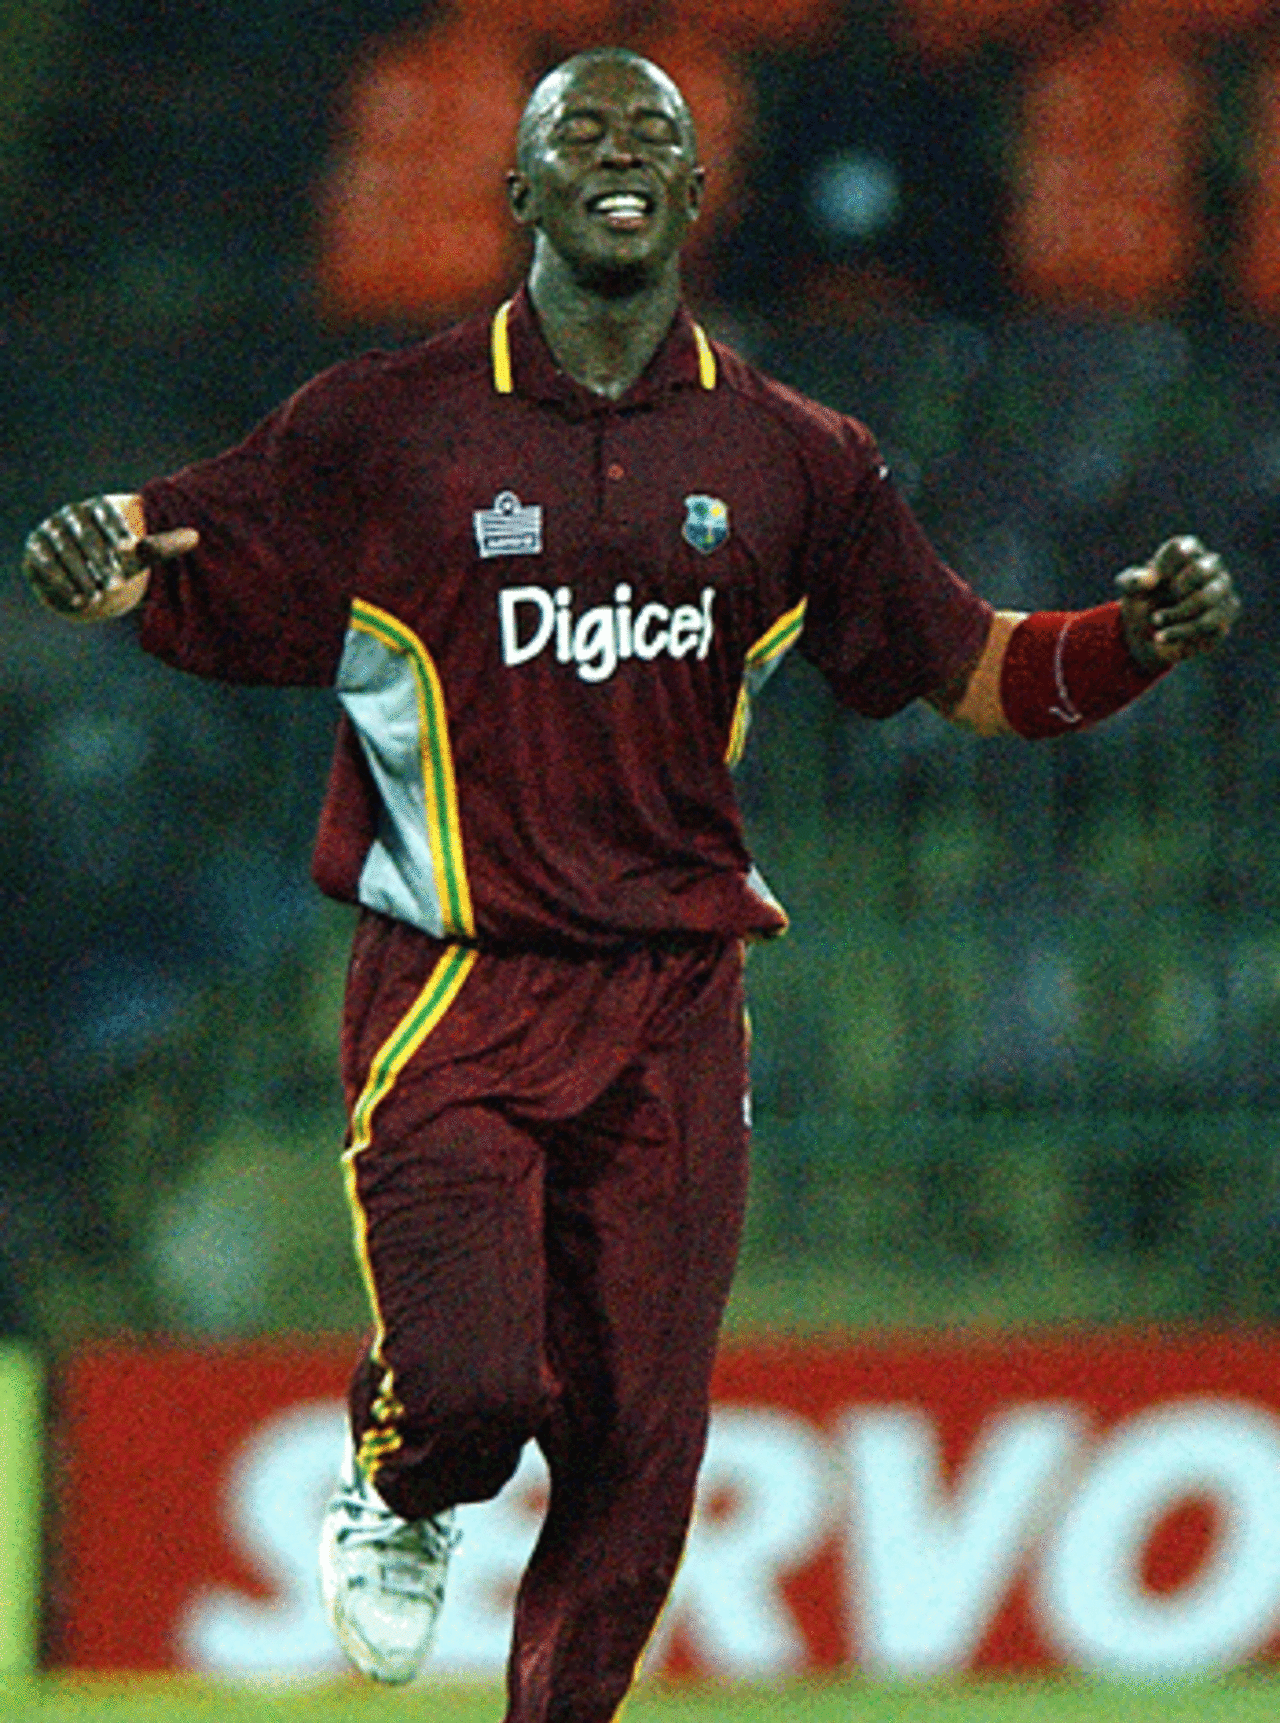 Deighton Butler celebrates the wicket of Sanath Jayasuriya, Sri Lanka v West Indies, Indian Oil Cup, Premadasa Stadium, Colombo, August 6, 2005